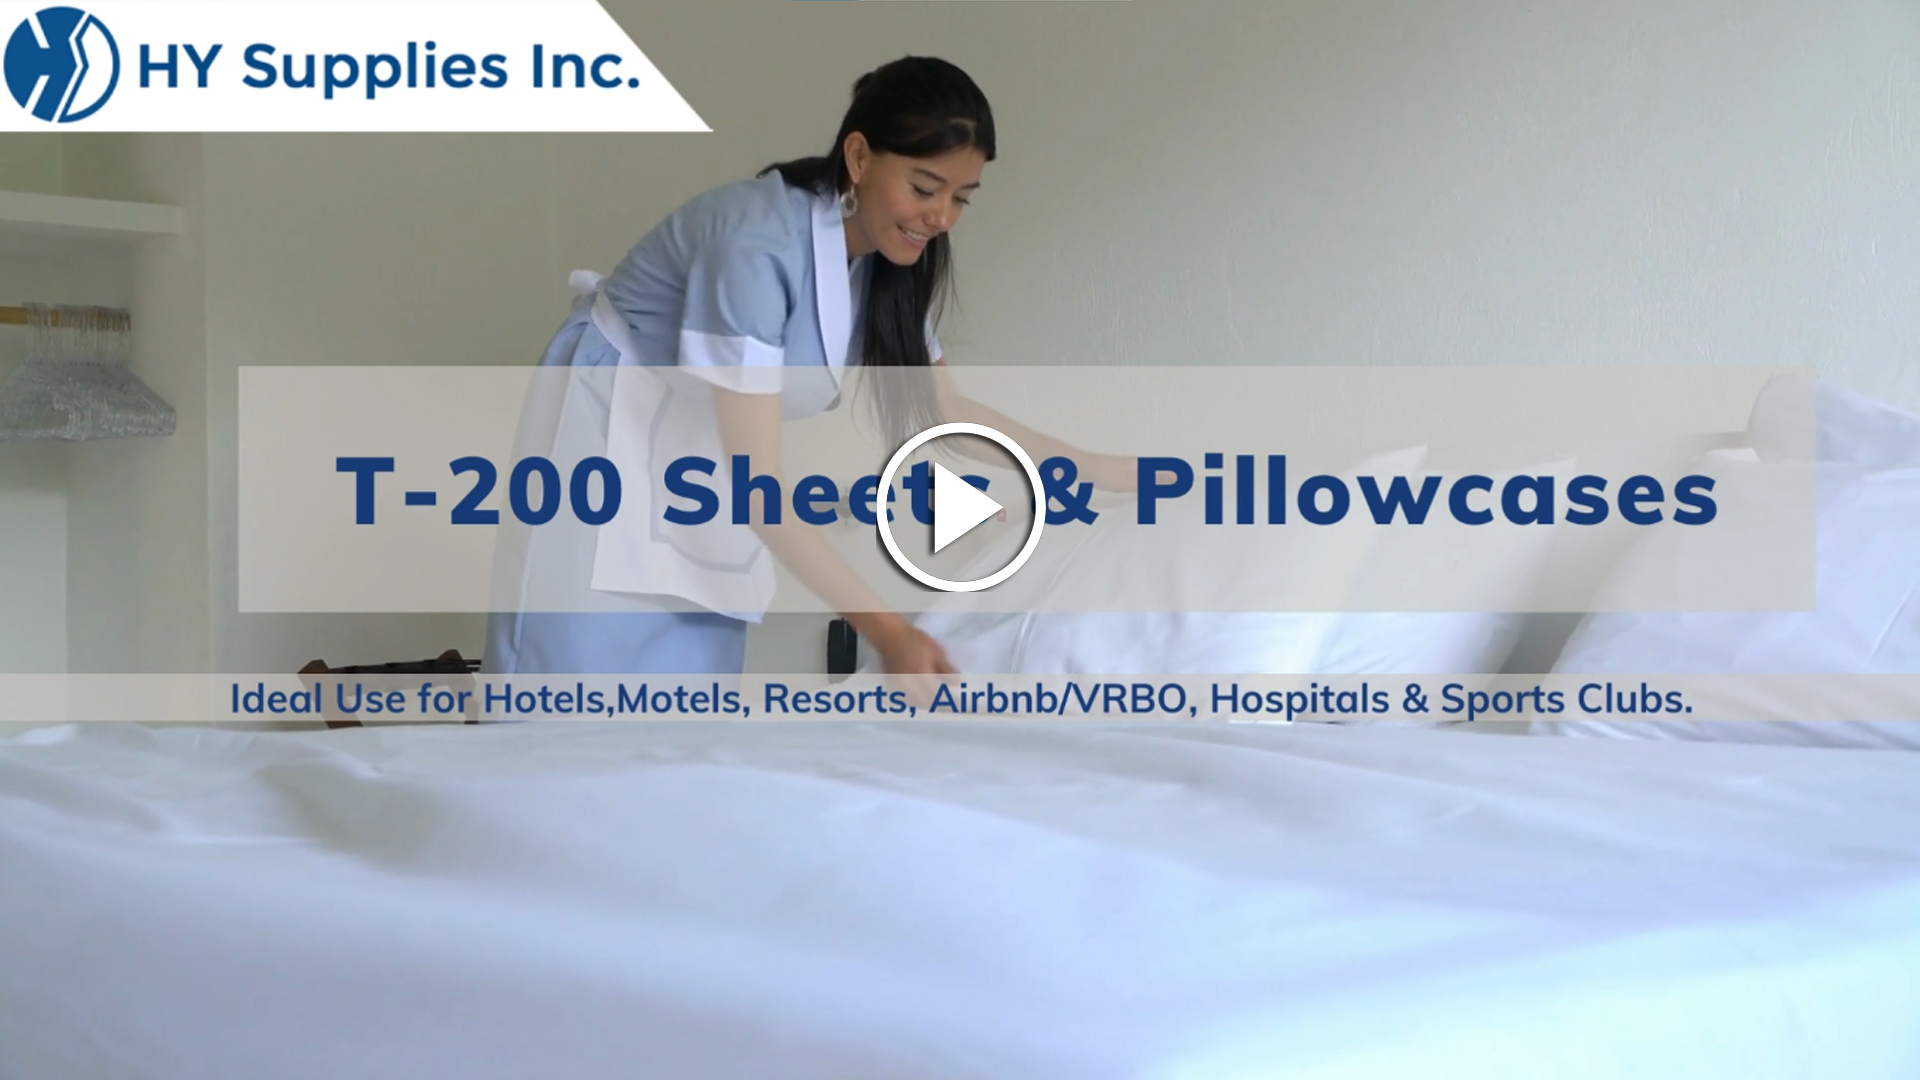 T-200 Sheets & Pillowcases